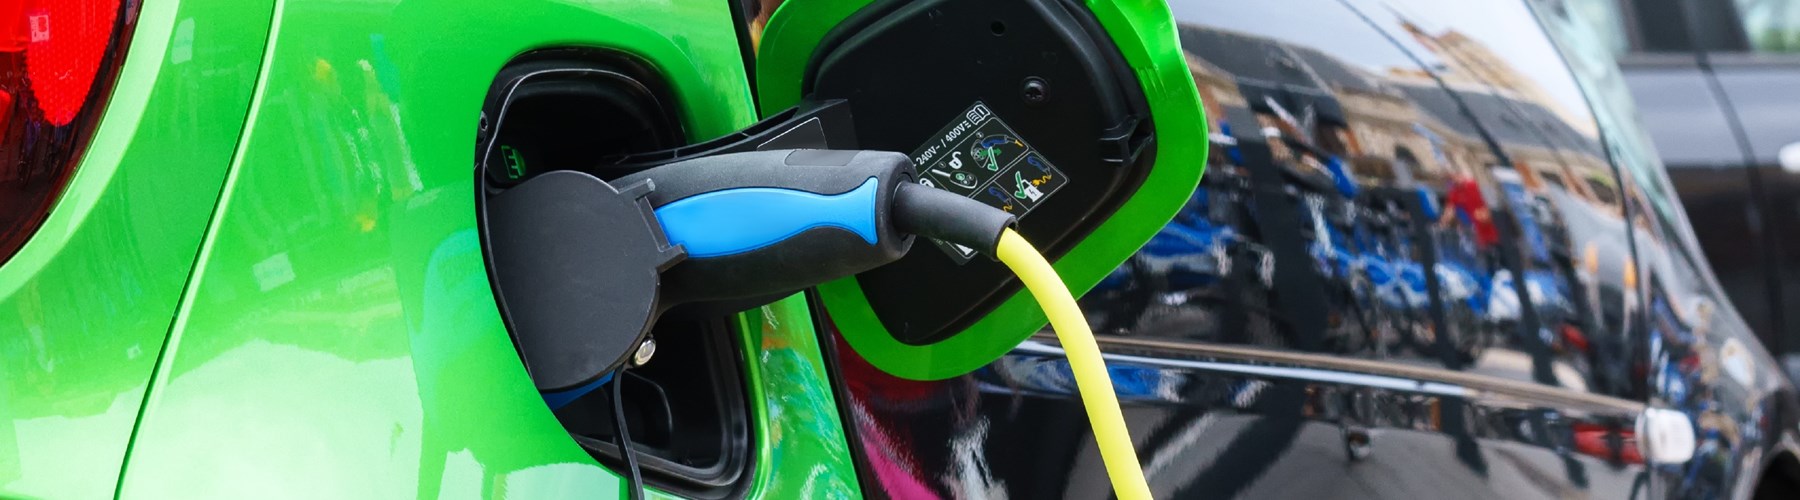 Green electric car using charging pump 